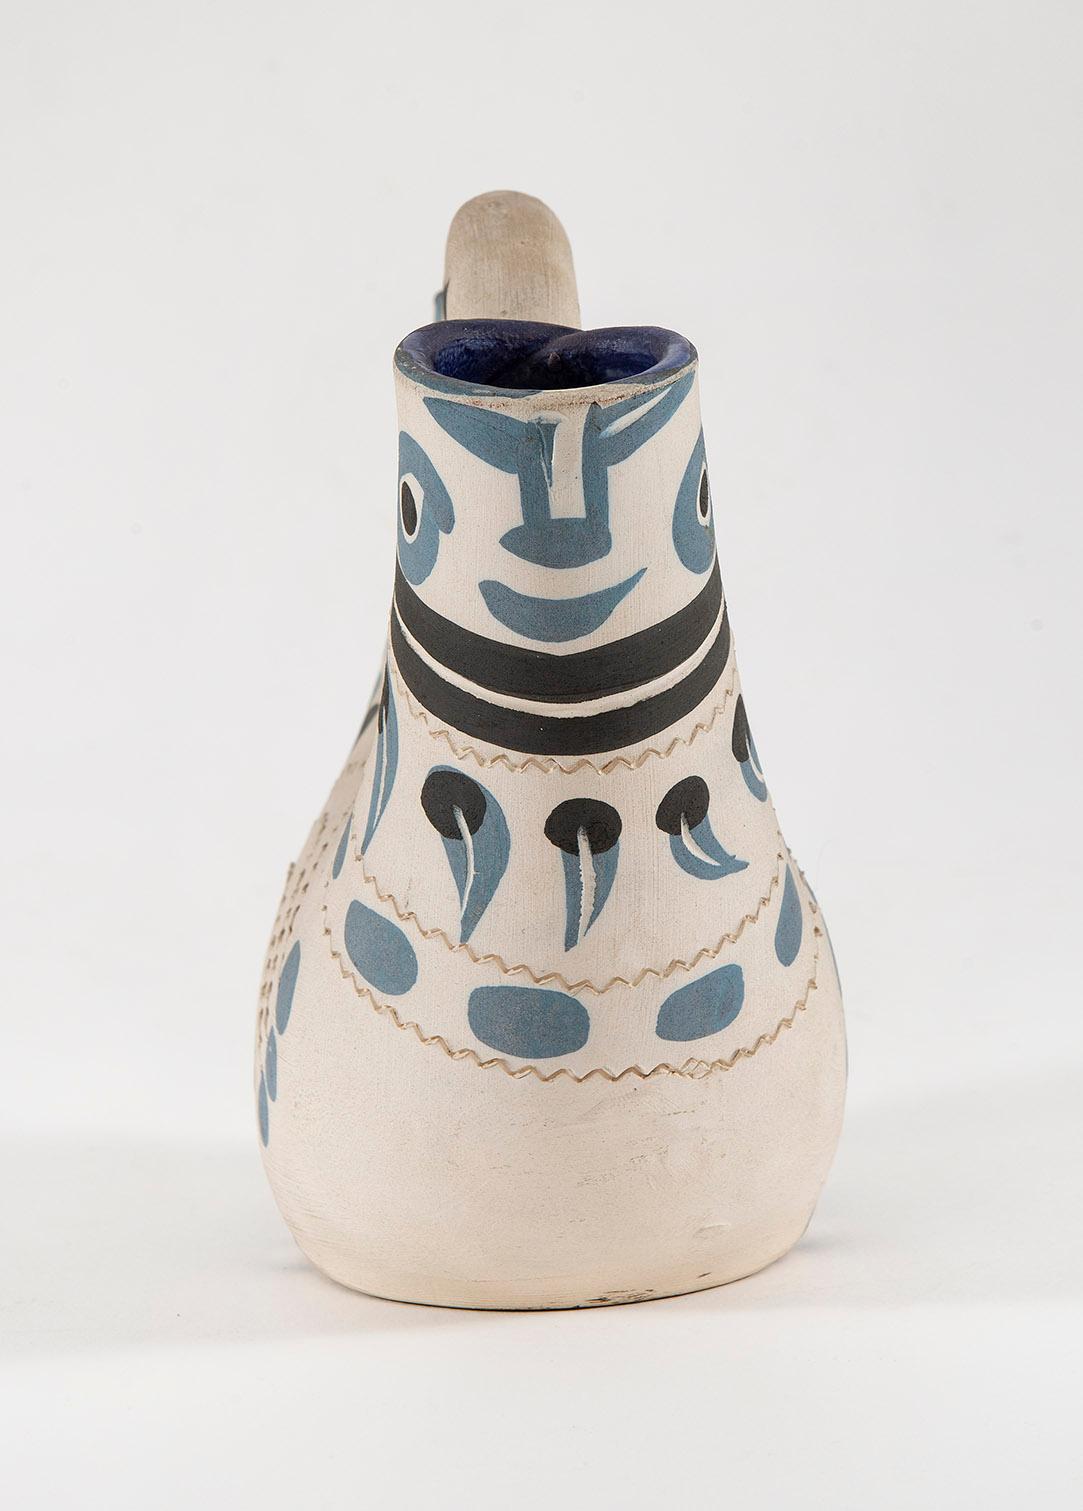 Pichet Espagnol, Picasso, 1950's, Pitcher, Ceramic, Earthenware, Multiple - Sculpture by Pablo Picasso